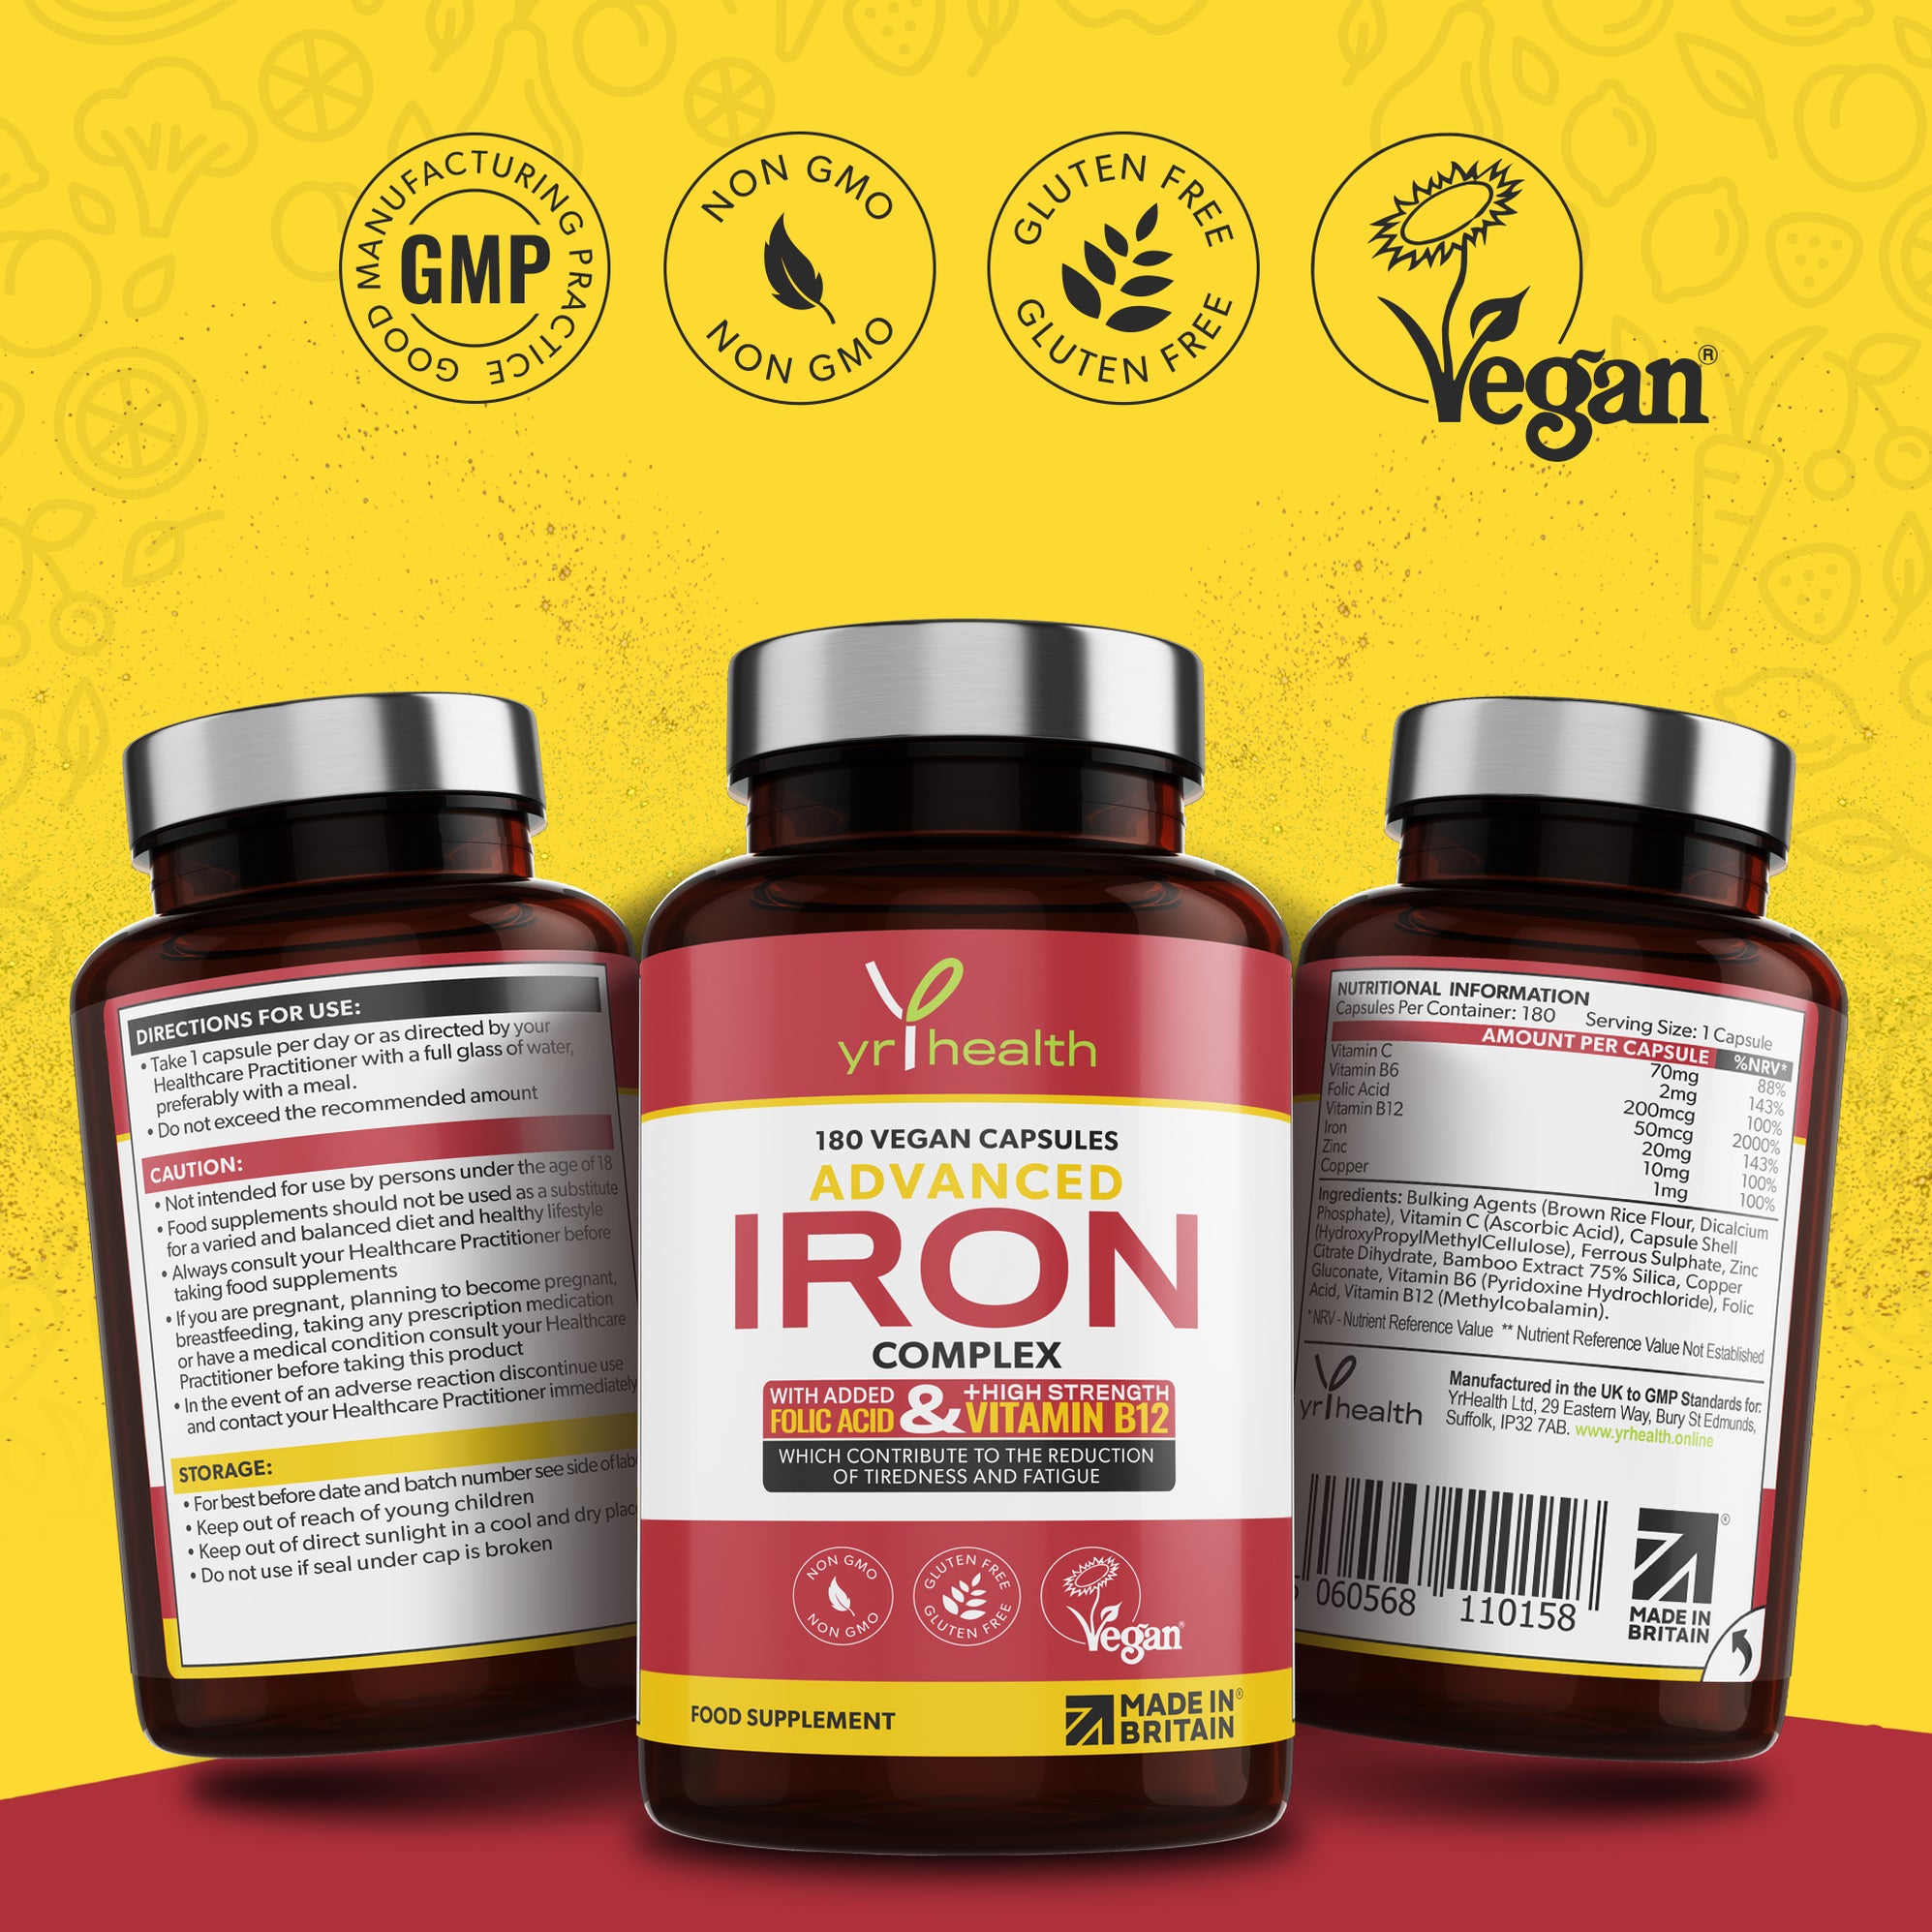 Iron vitamin. Iron folic acid. Железо витамины для волос. Iron with Vitamin c. Ультра вит железо.